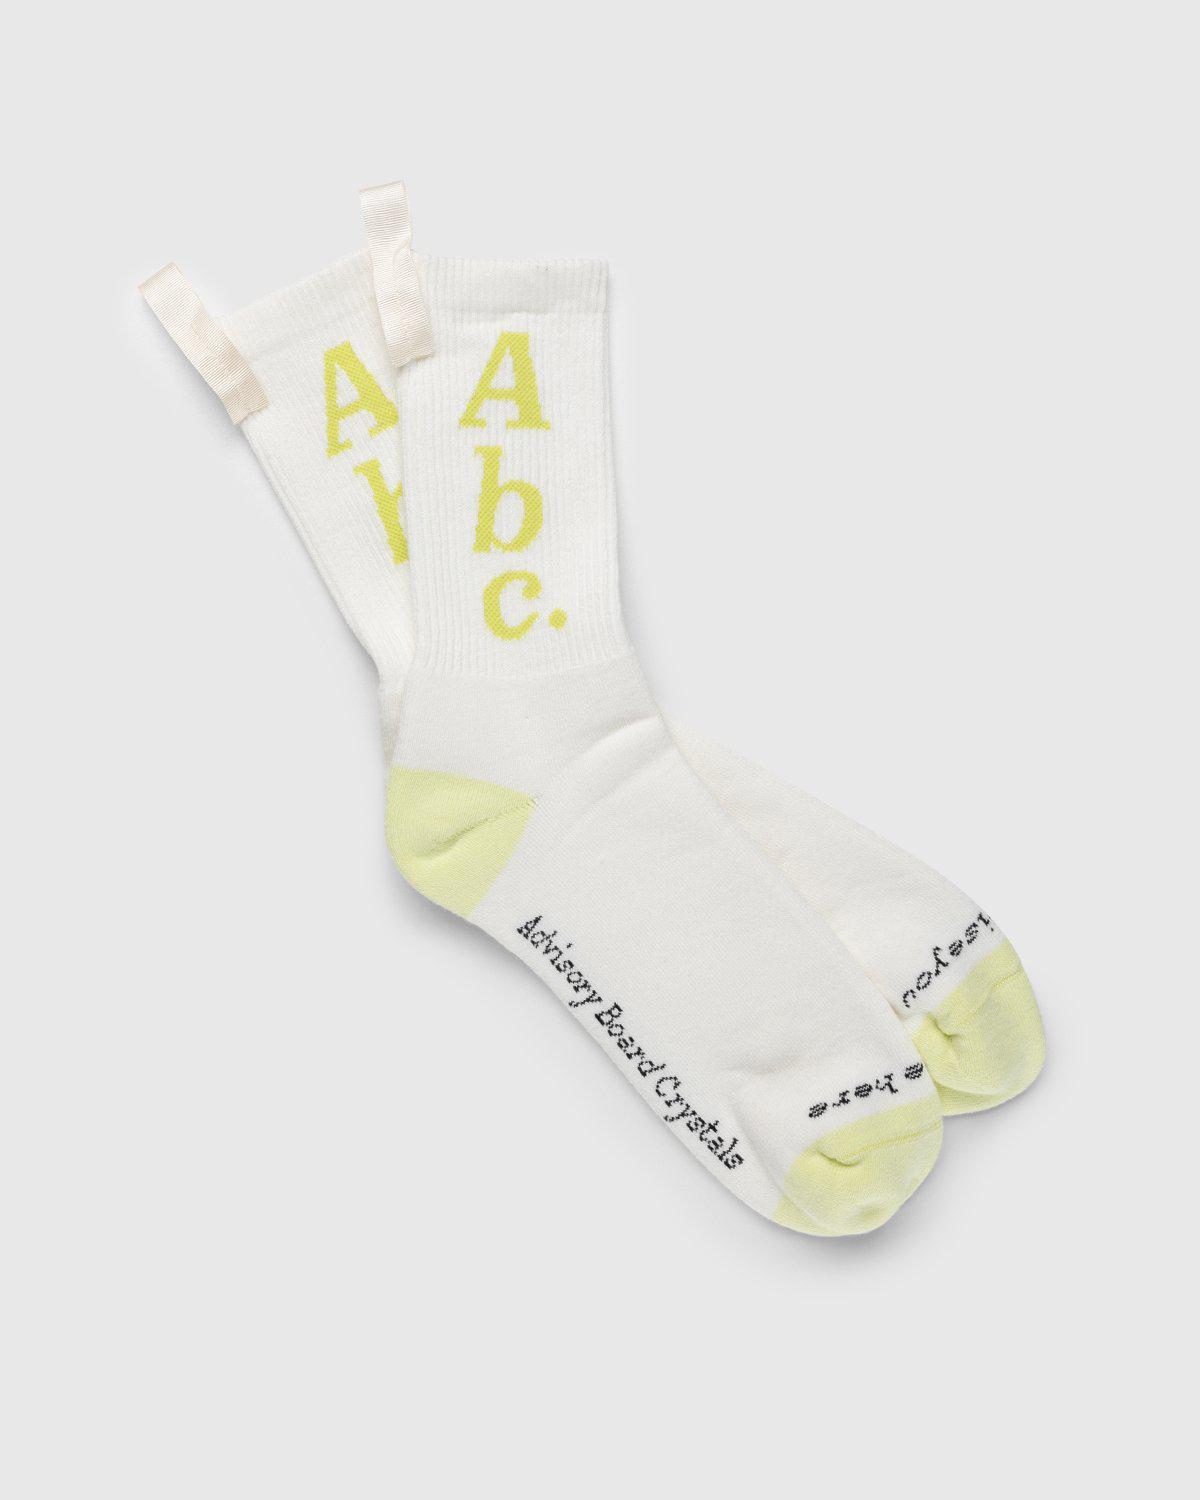 Abc. – Crew Socks Selenite/Sulfur by ABC.